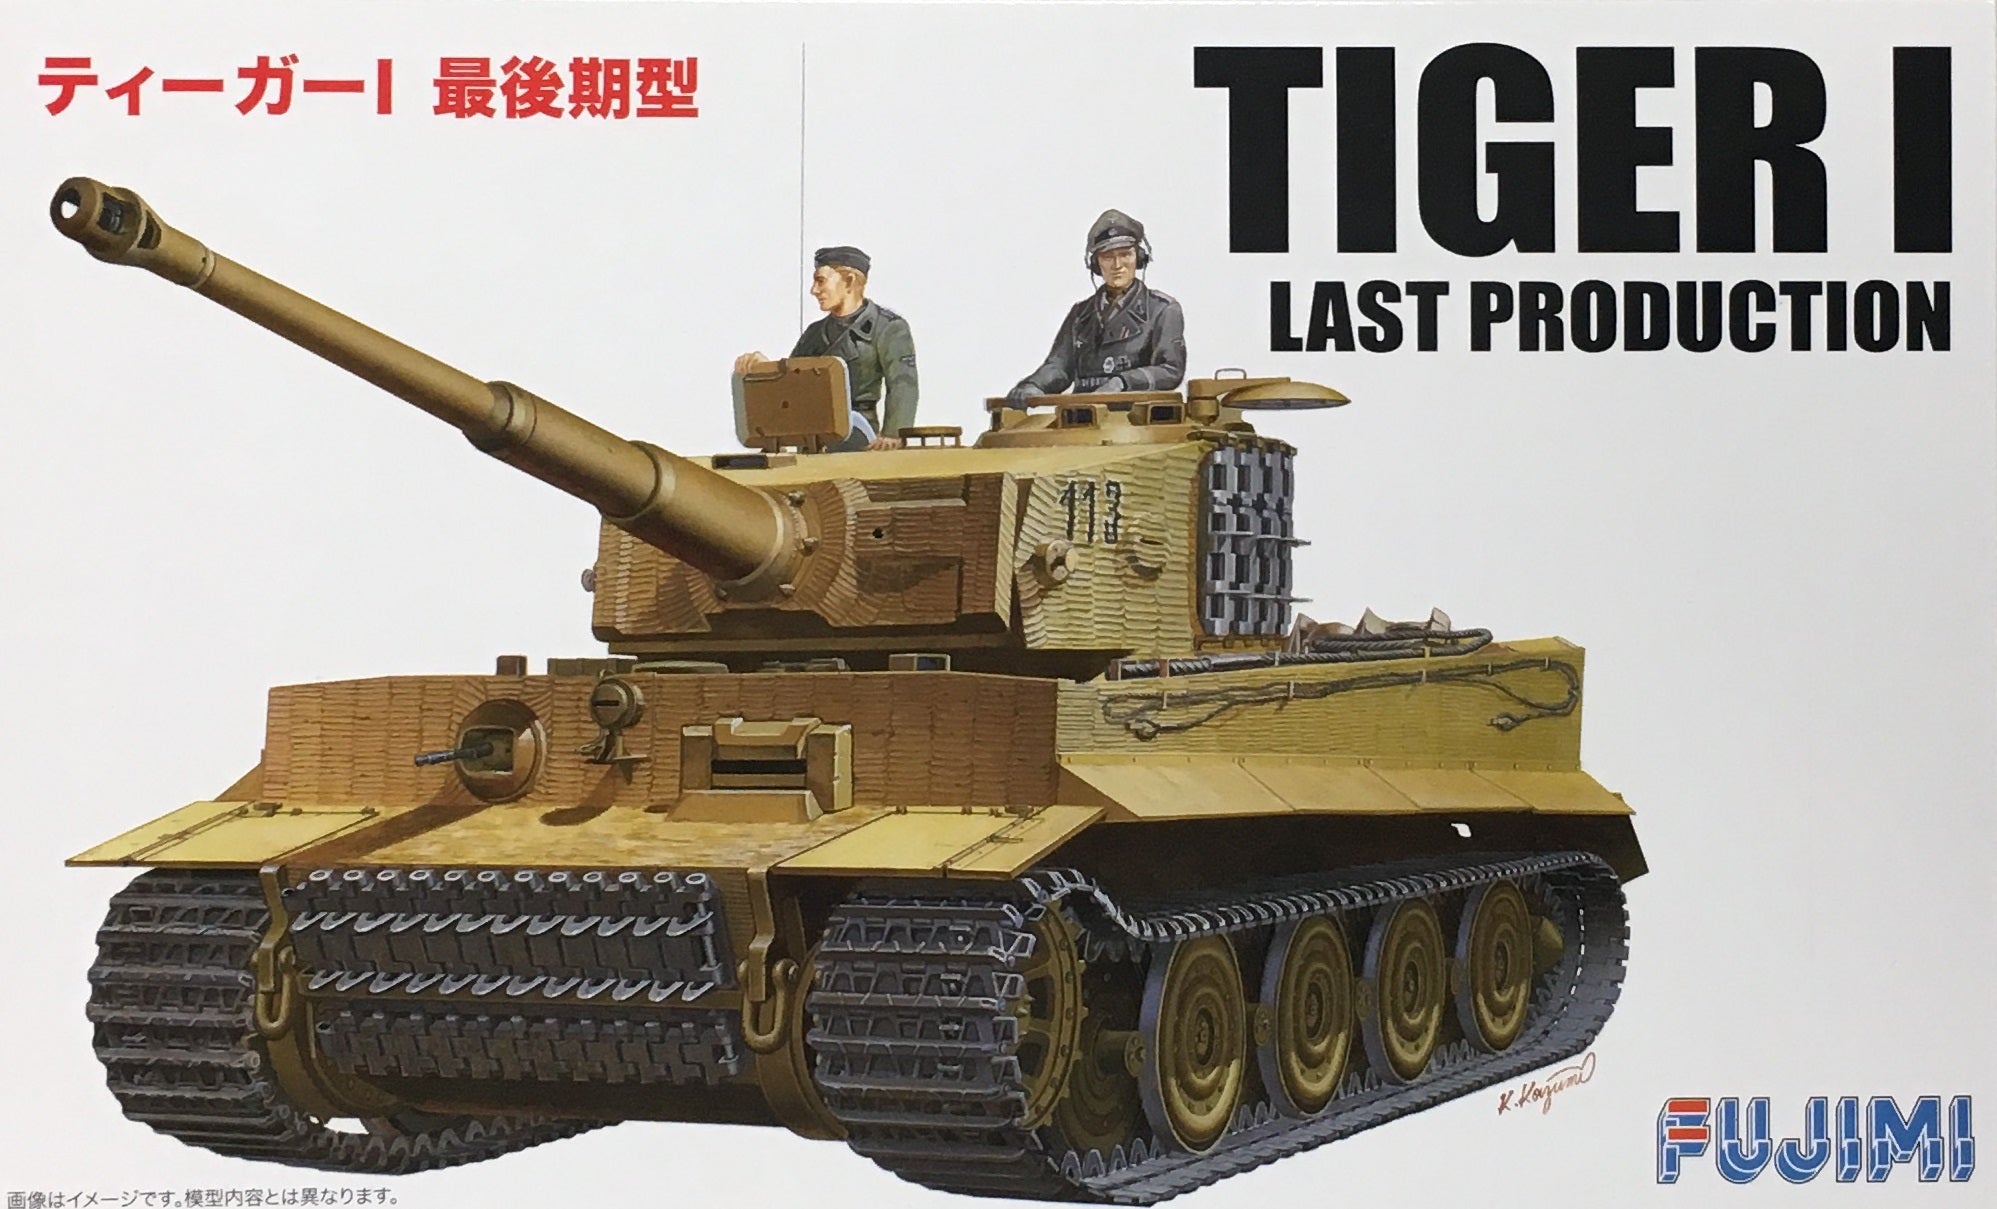 Tiger I Latest Production